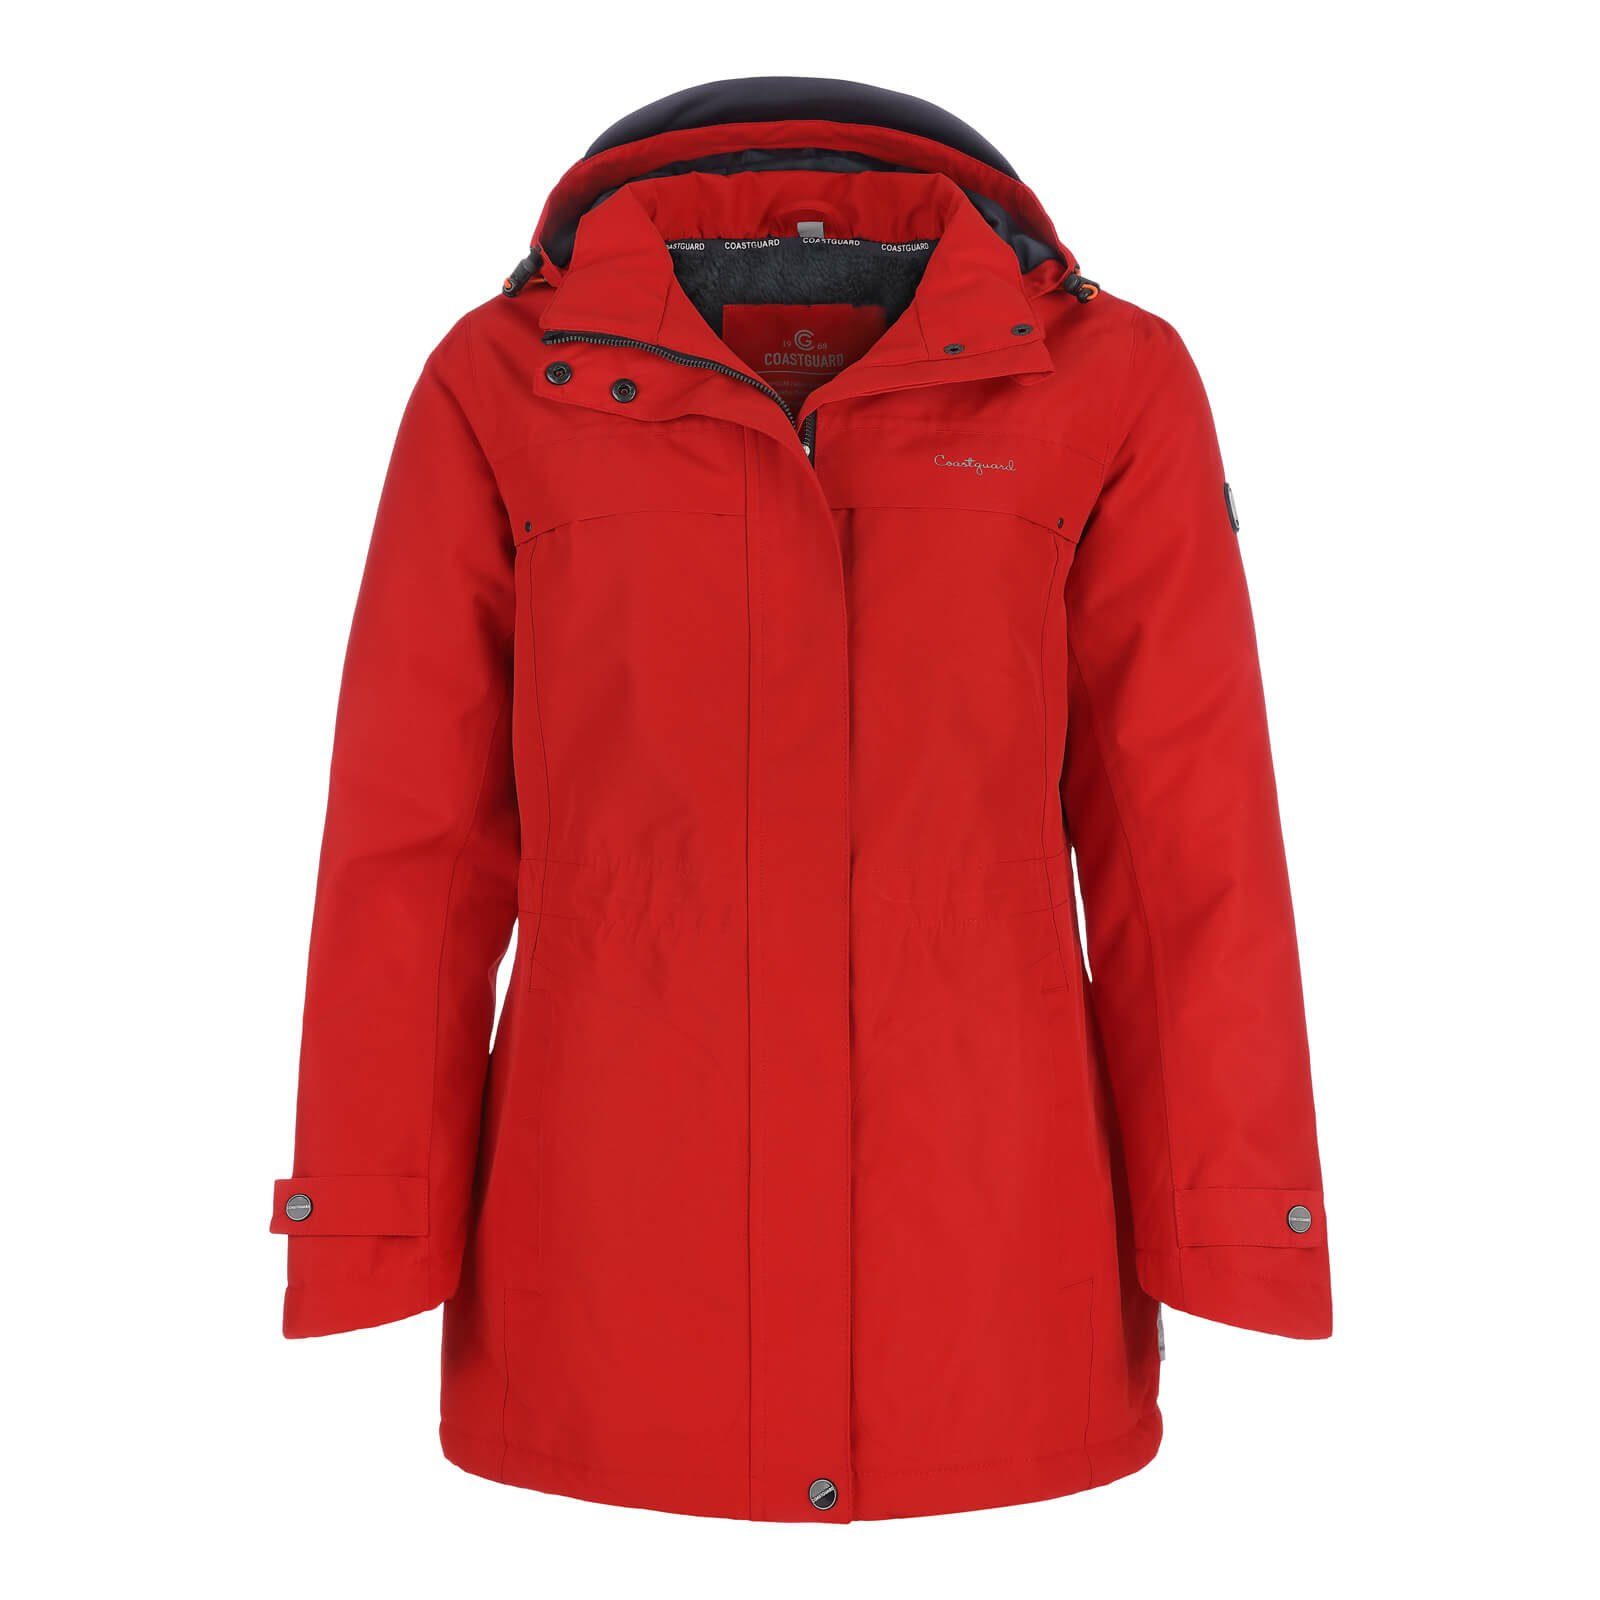 Coastguard Funktionsjacke Damen Outdoor-Jacke mit atmungsaktiv - Kapuze rot wasserdicht abnehmbarer